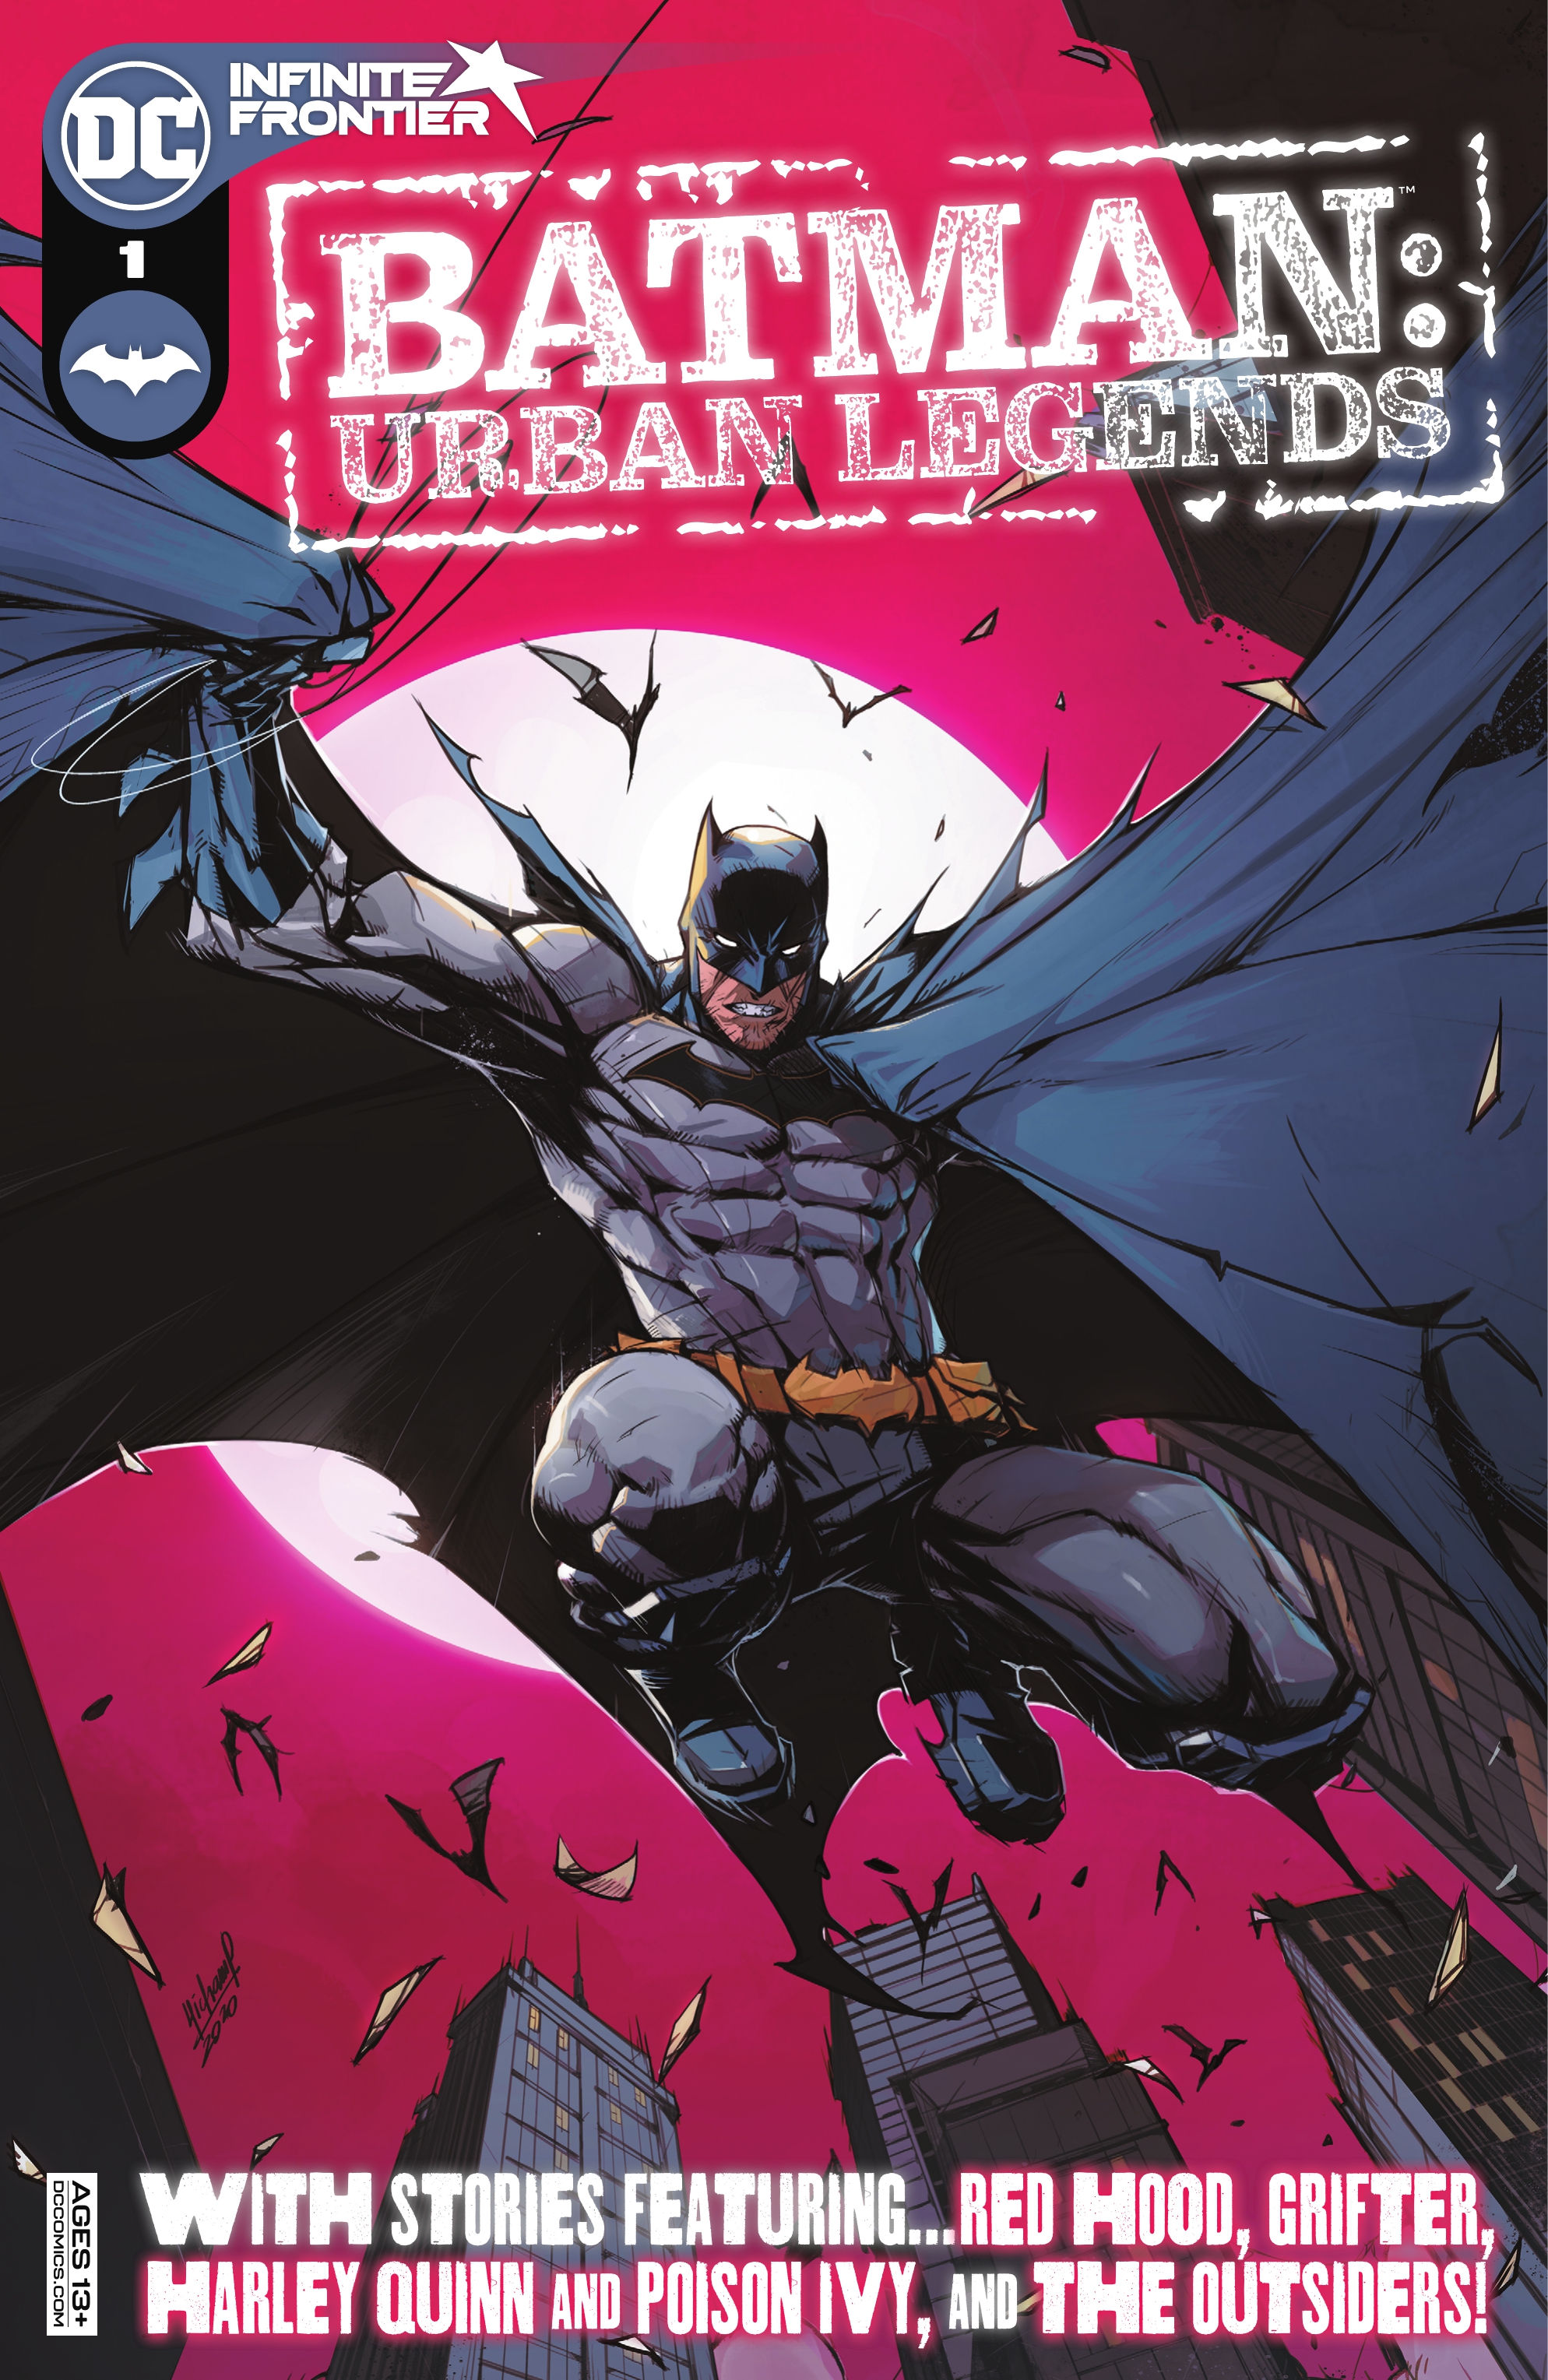 Batman urban legends read online